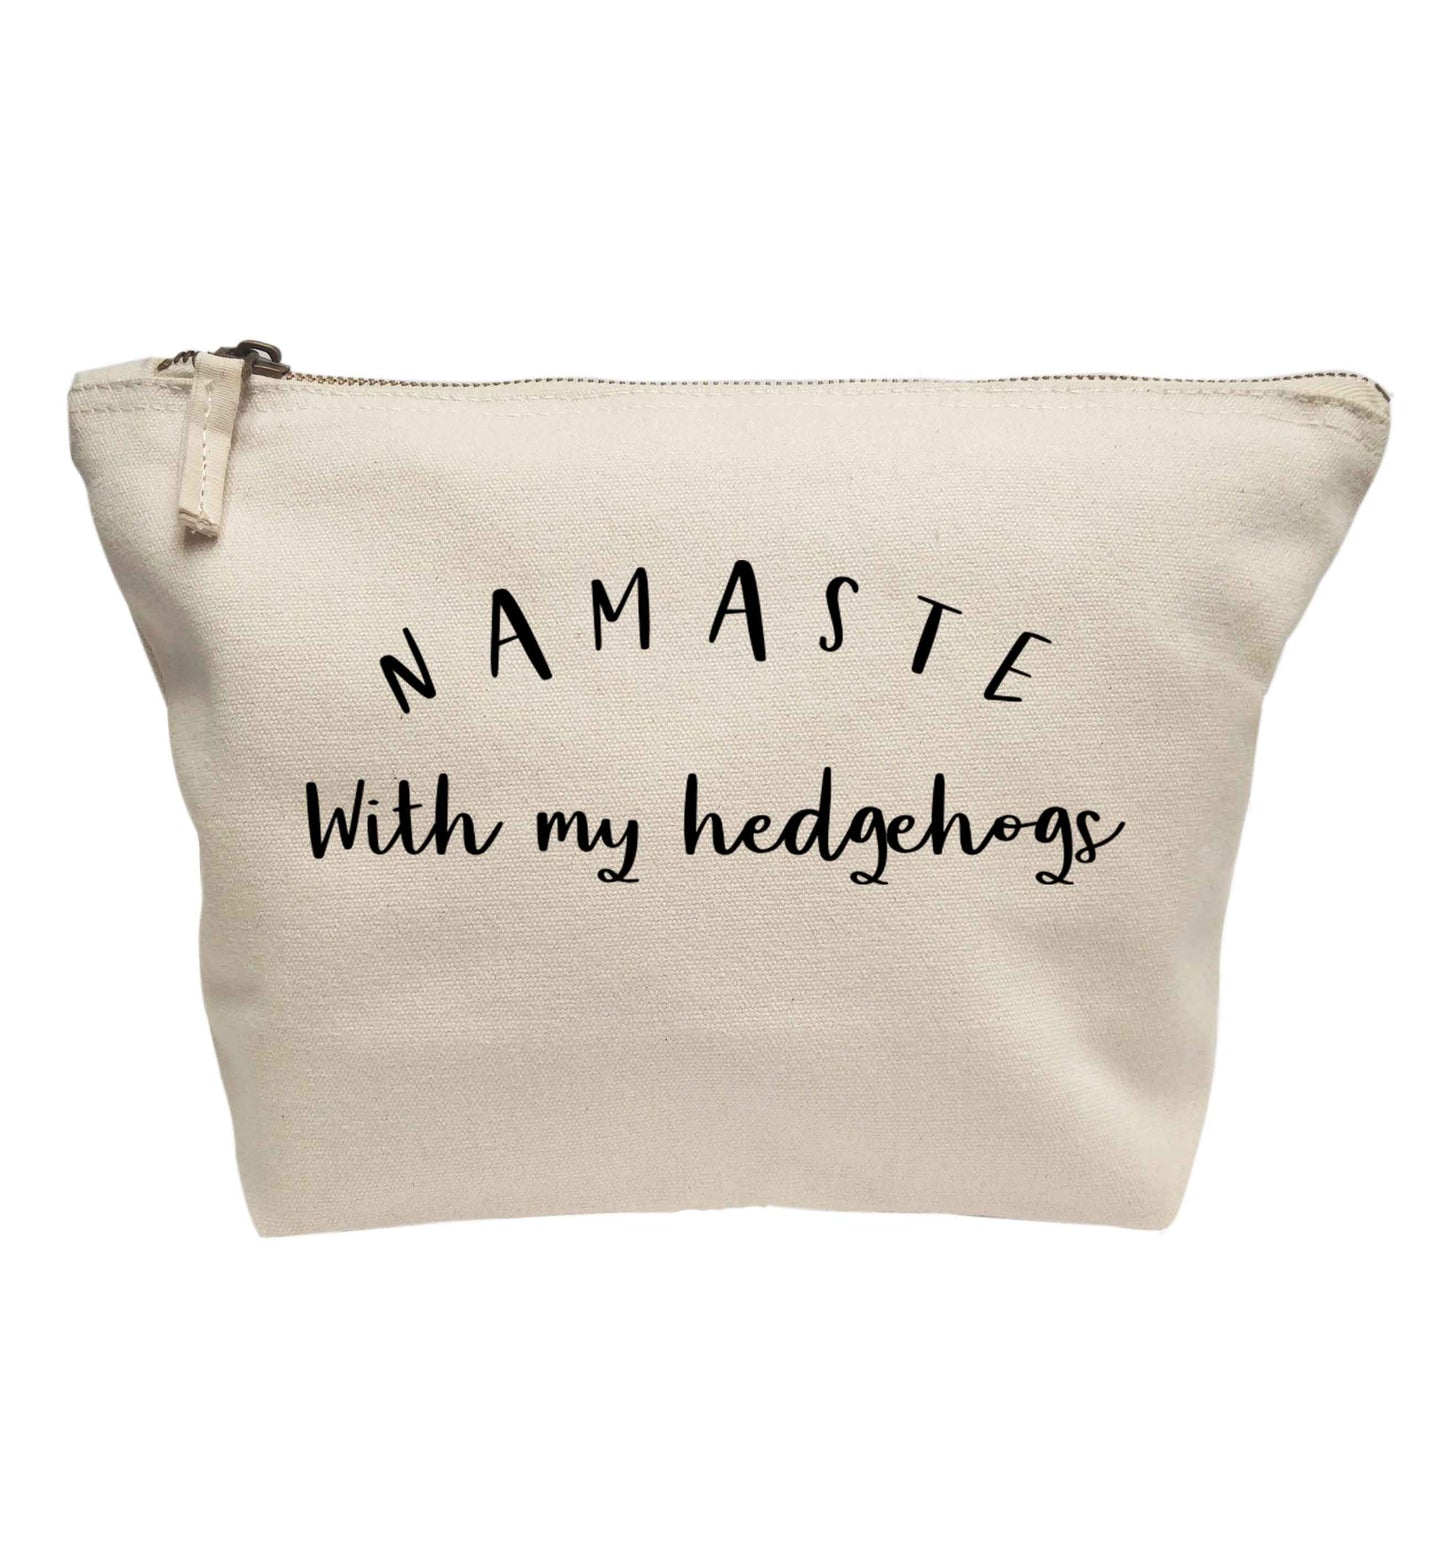 Namaste with my hedgehog | makeup / wash bag